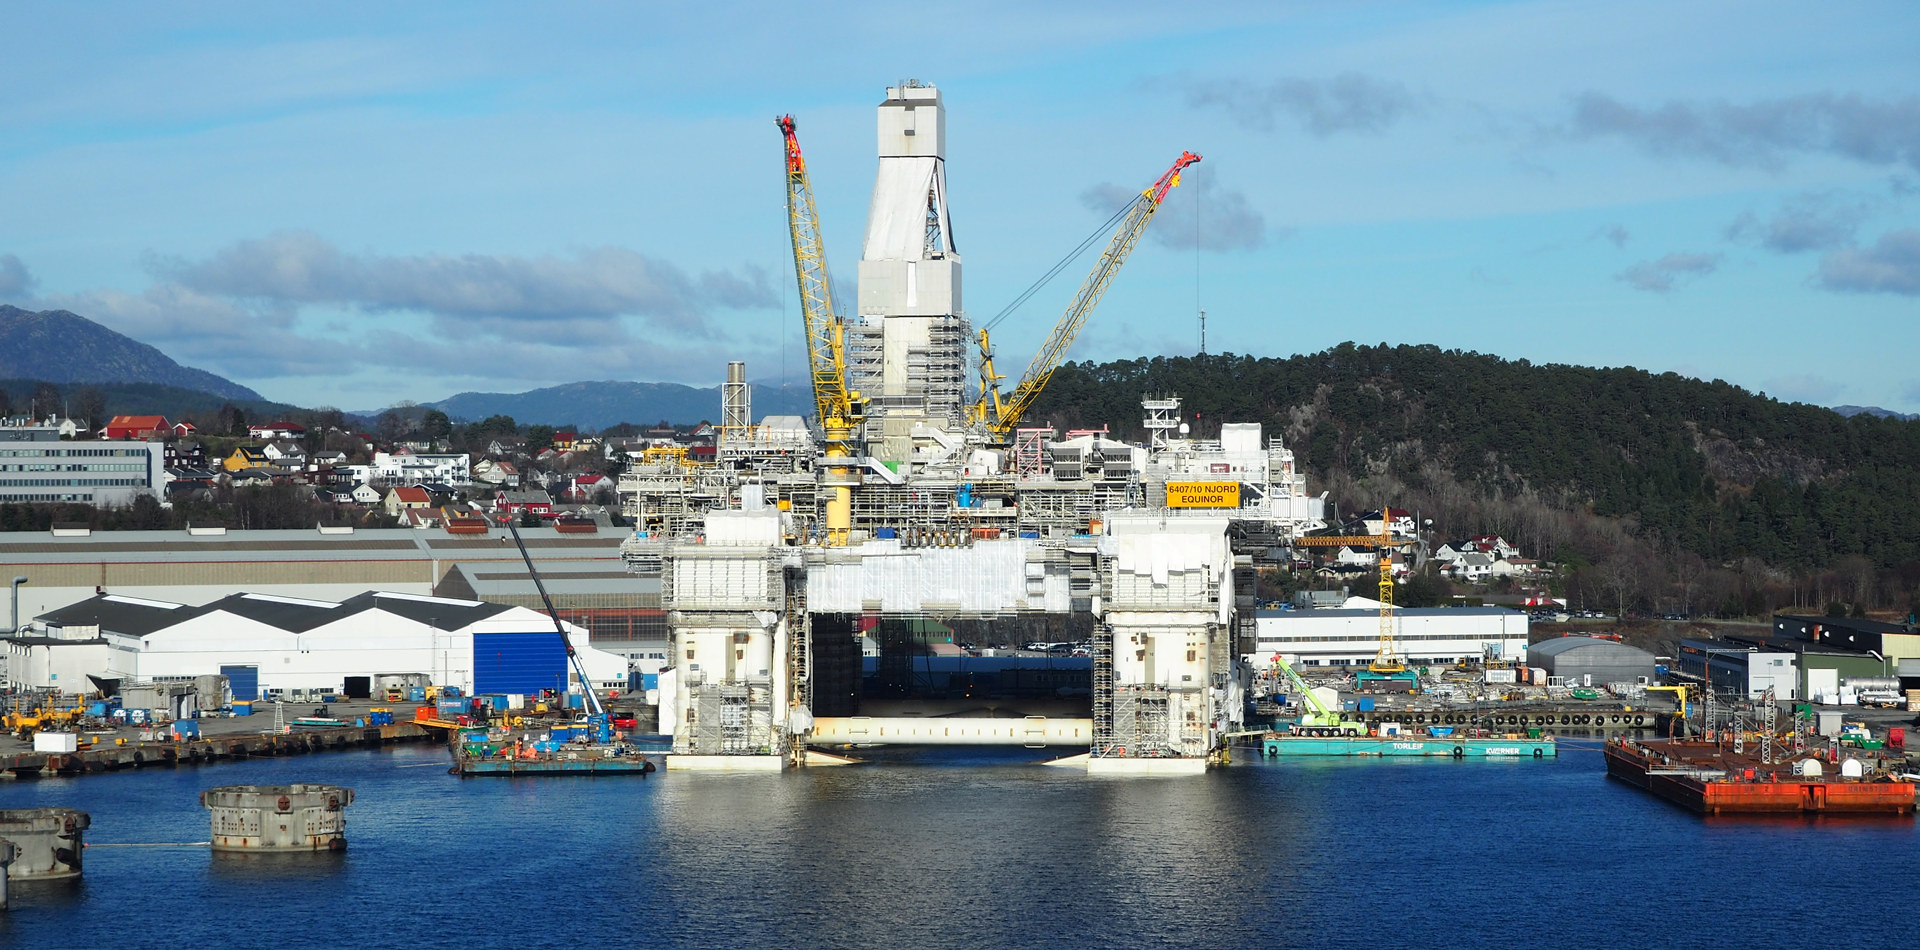 Njord oppgraderes hos Kværner Stord. Foto: Cathrine W. Eidal / Norsk Industri